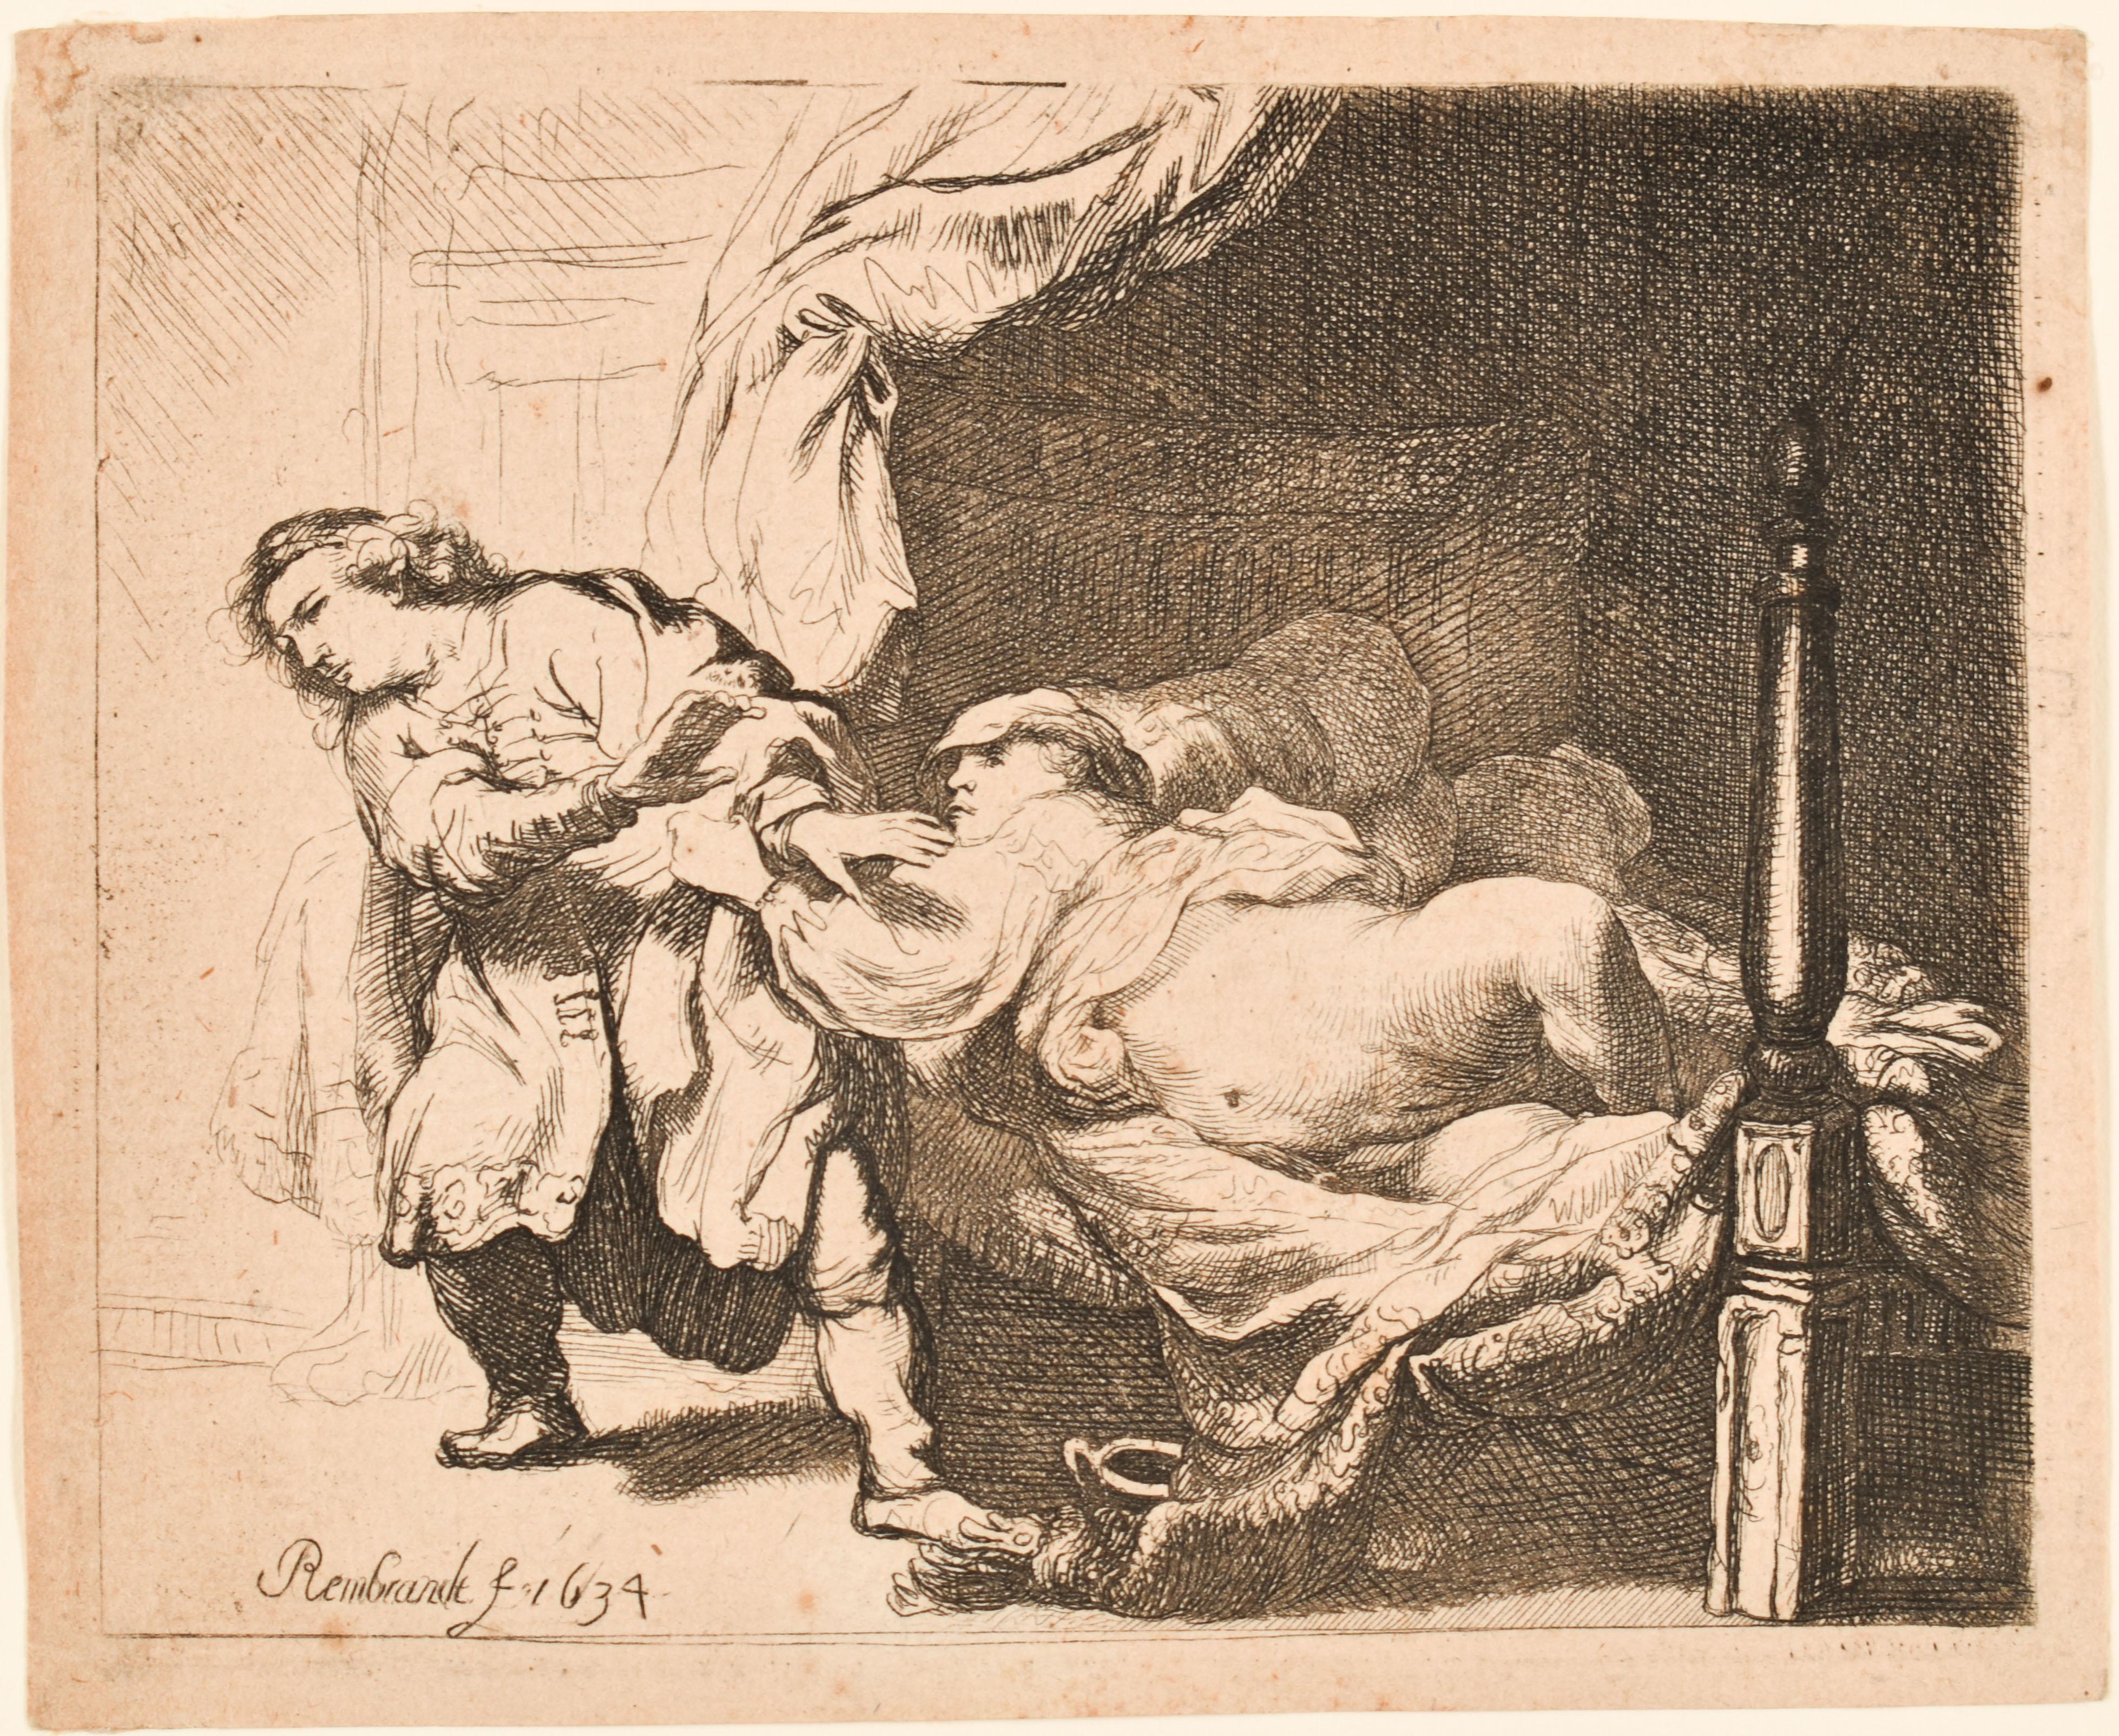 Rembrandt van Rijn Figurative Print - Joseph and Potiphar's Wife (1634) - Rembrandt - Etching - Dutch - 1634 - Europe